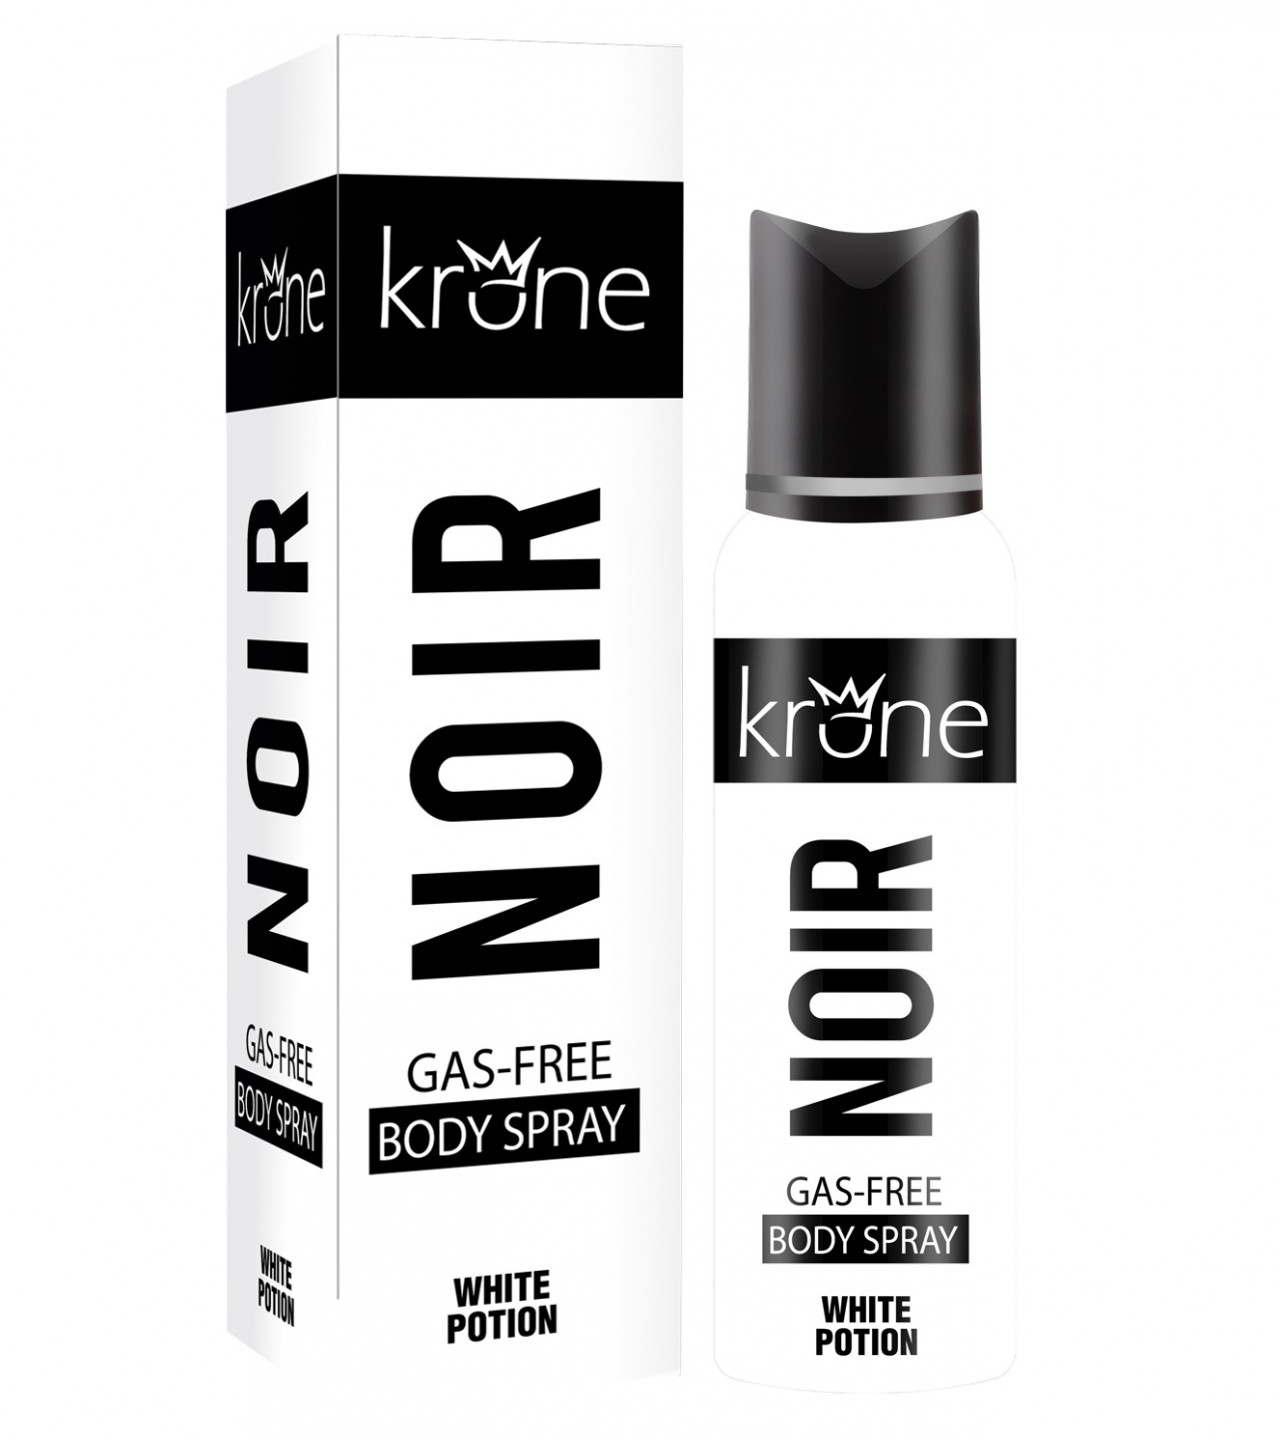 Krone Noir White Potion Perfume Body Spray - 120 ml